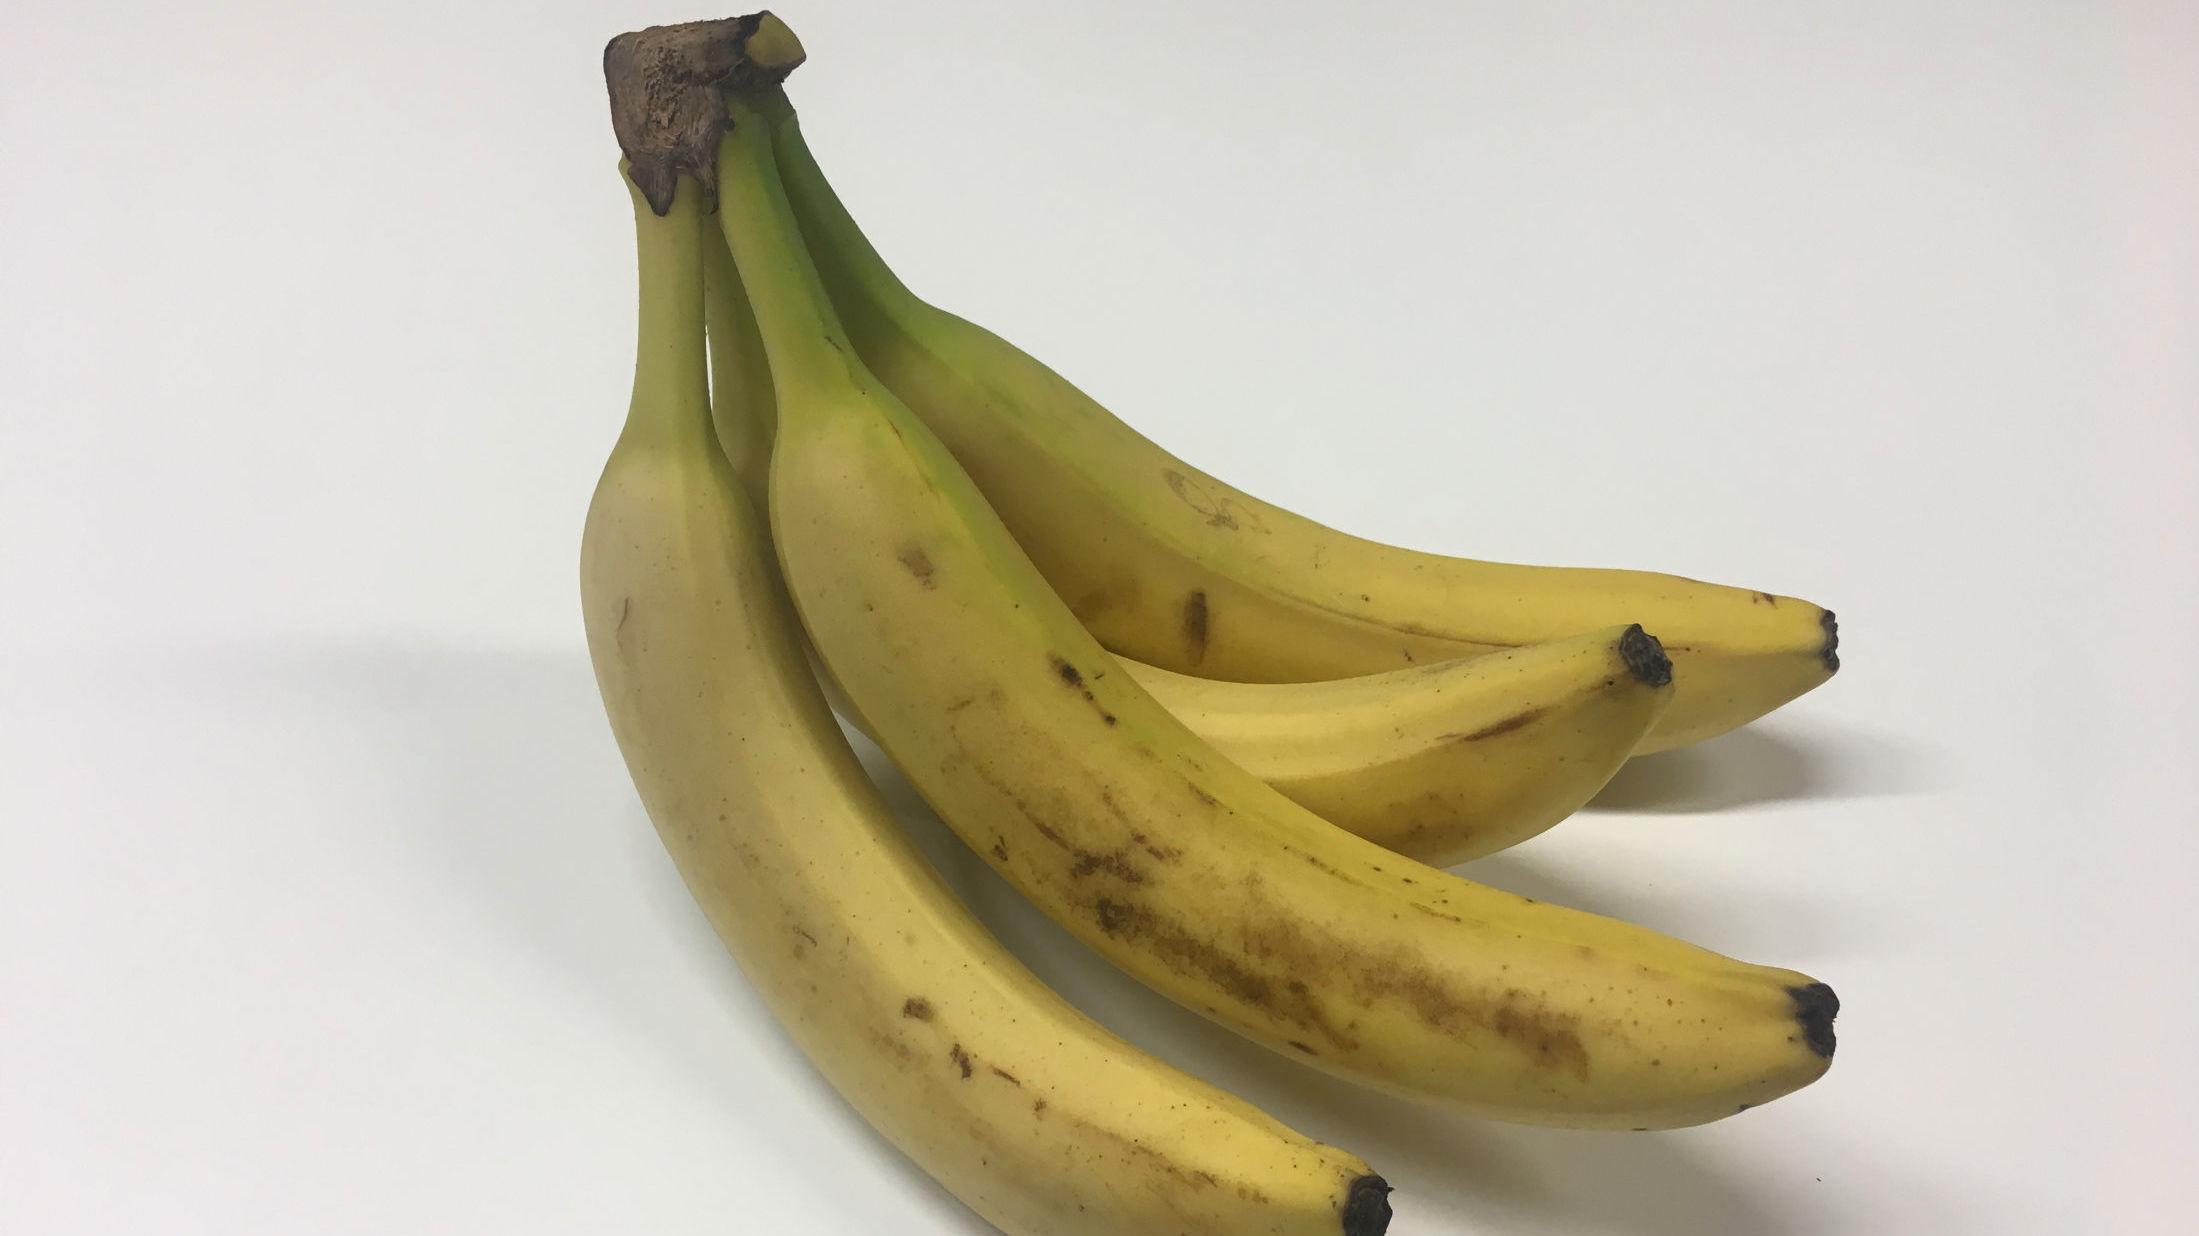 VERSTING: Banan er svært lite miljøvennlig, ifølge professor i ernæring. Foto: Maria Tveiten Helgeby/VG